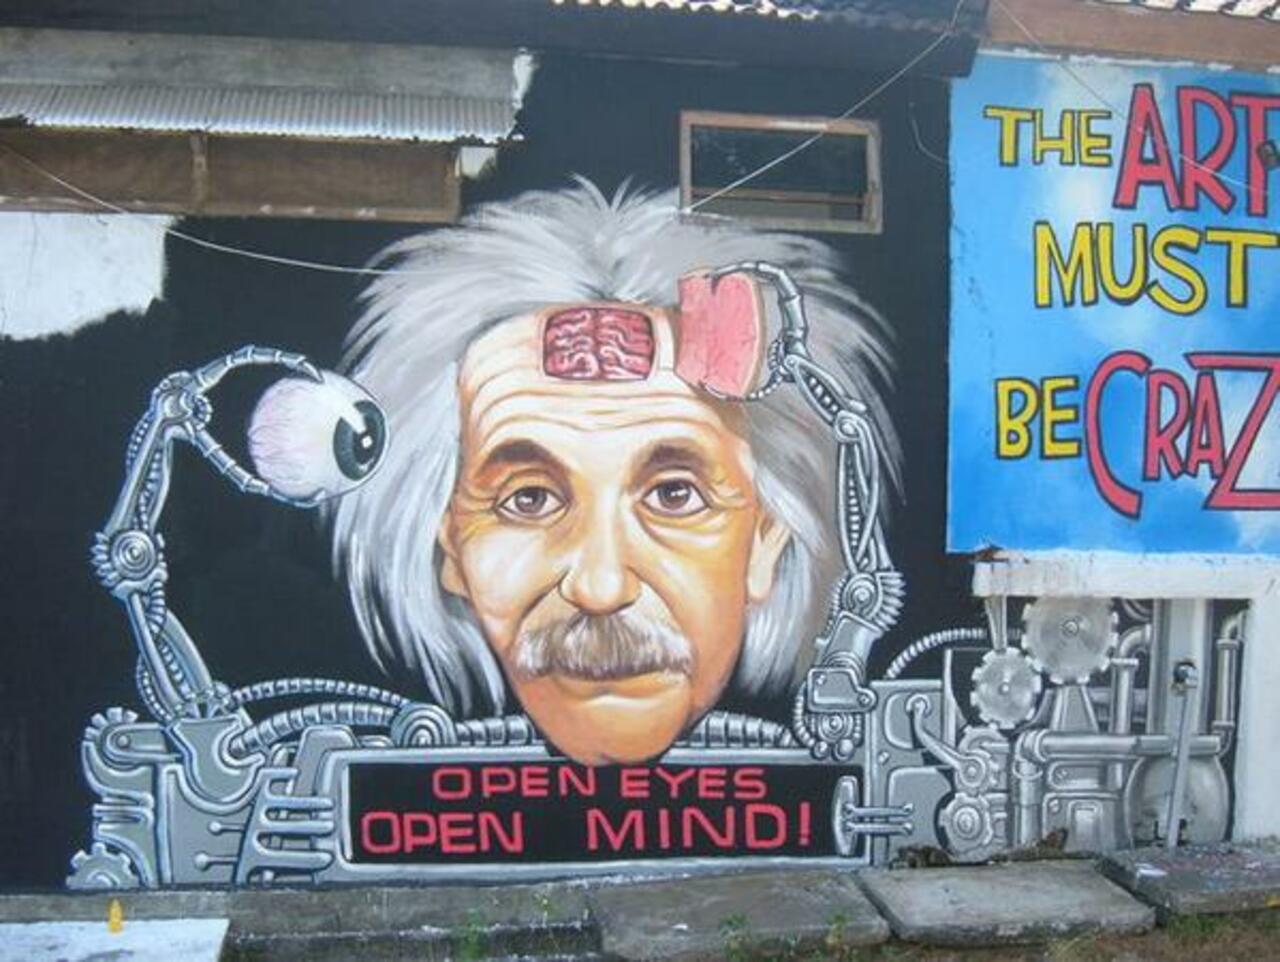 RT @streetartscout: "Open Eyes, Open Mind!" Einstein #streetart mural via @Nad2107 #graffiti #einstein #urbanart #mural #aerosol #art http://t.co/Jn7a6IyJe9